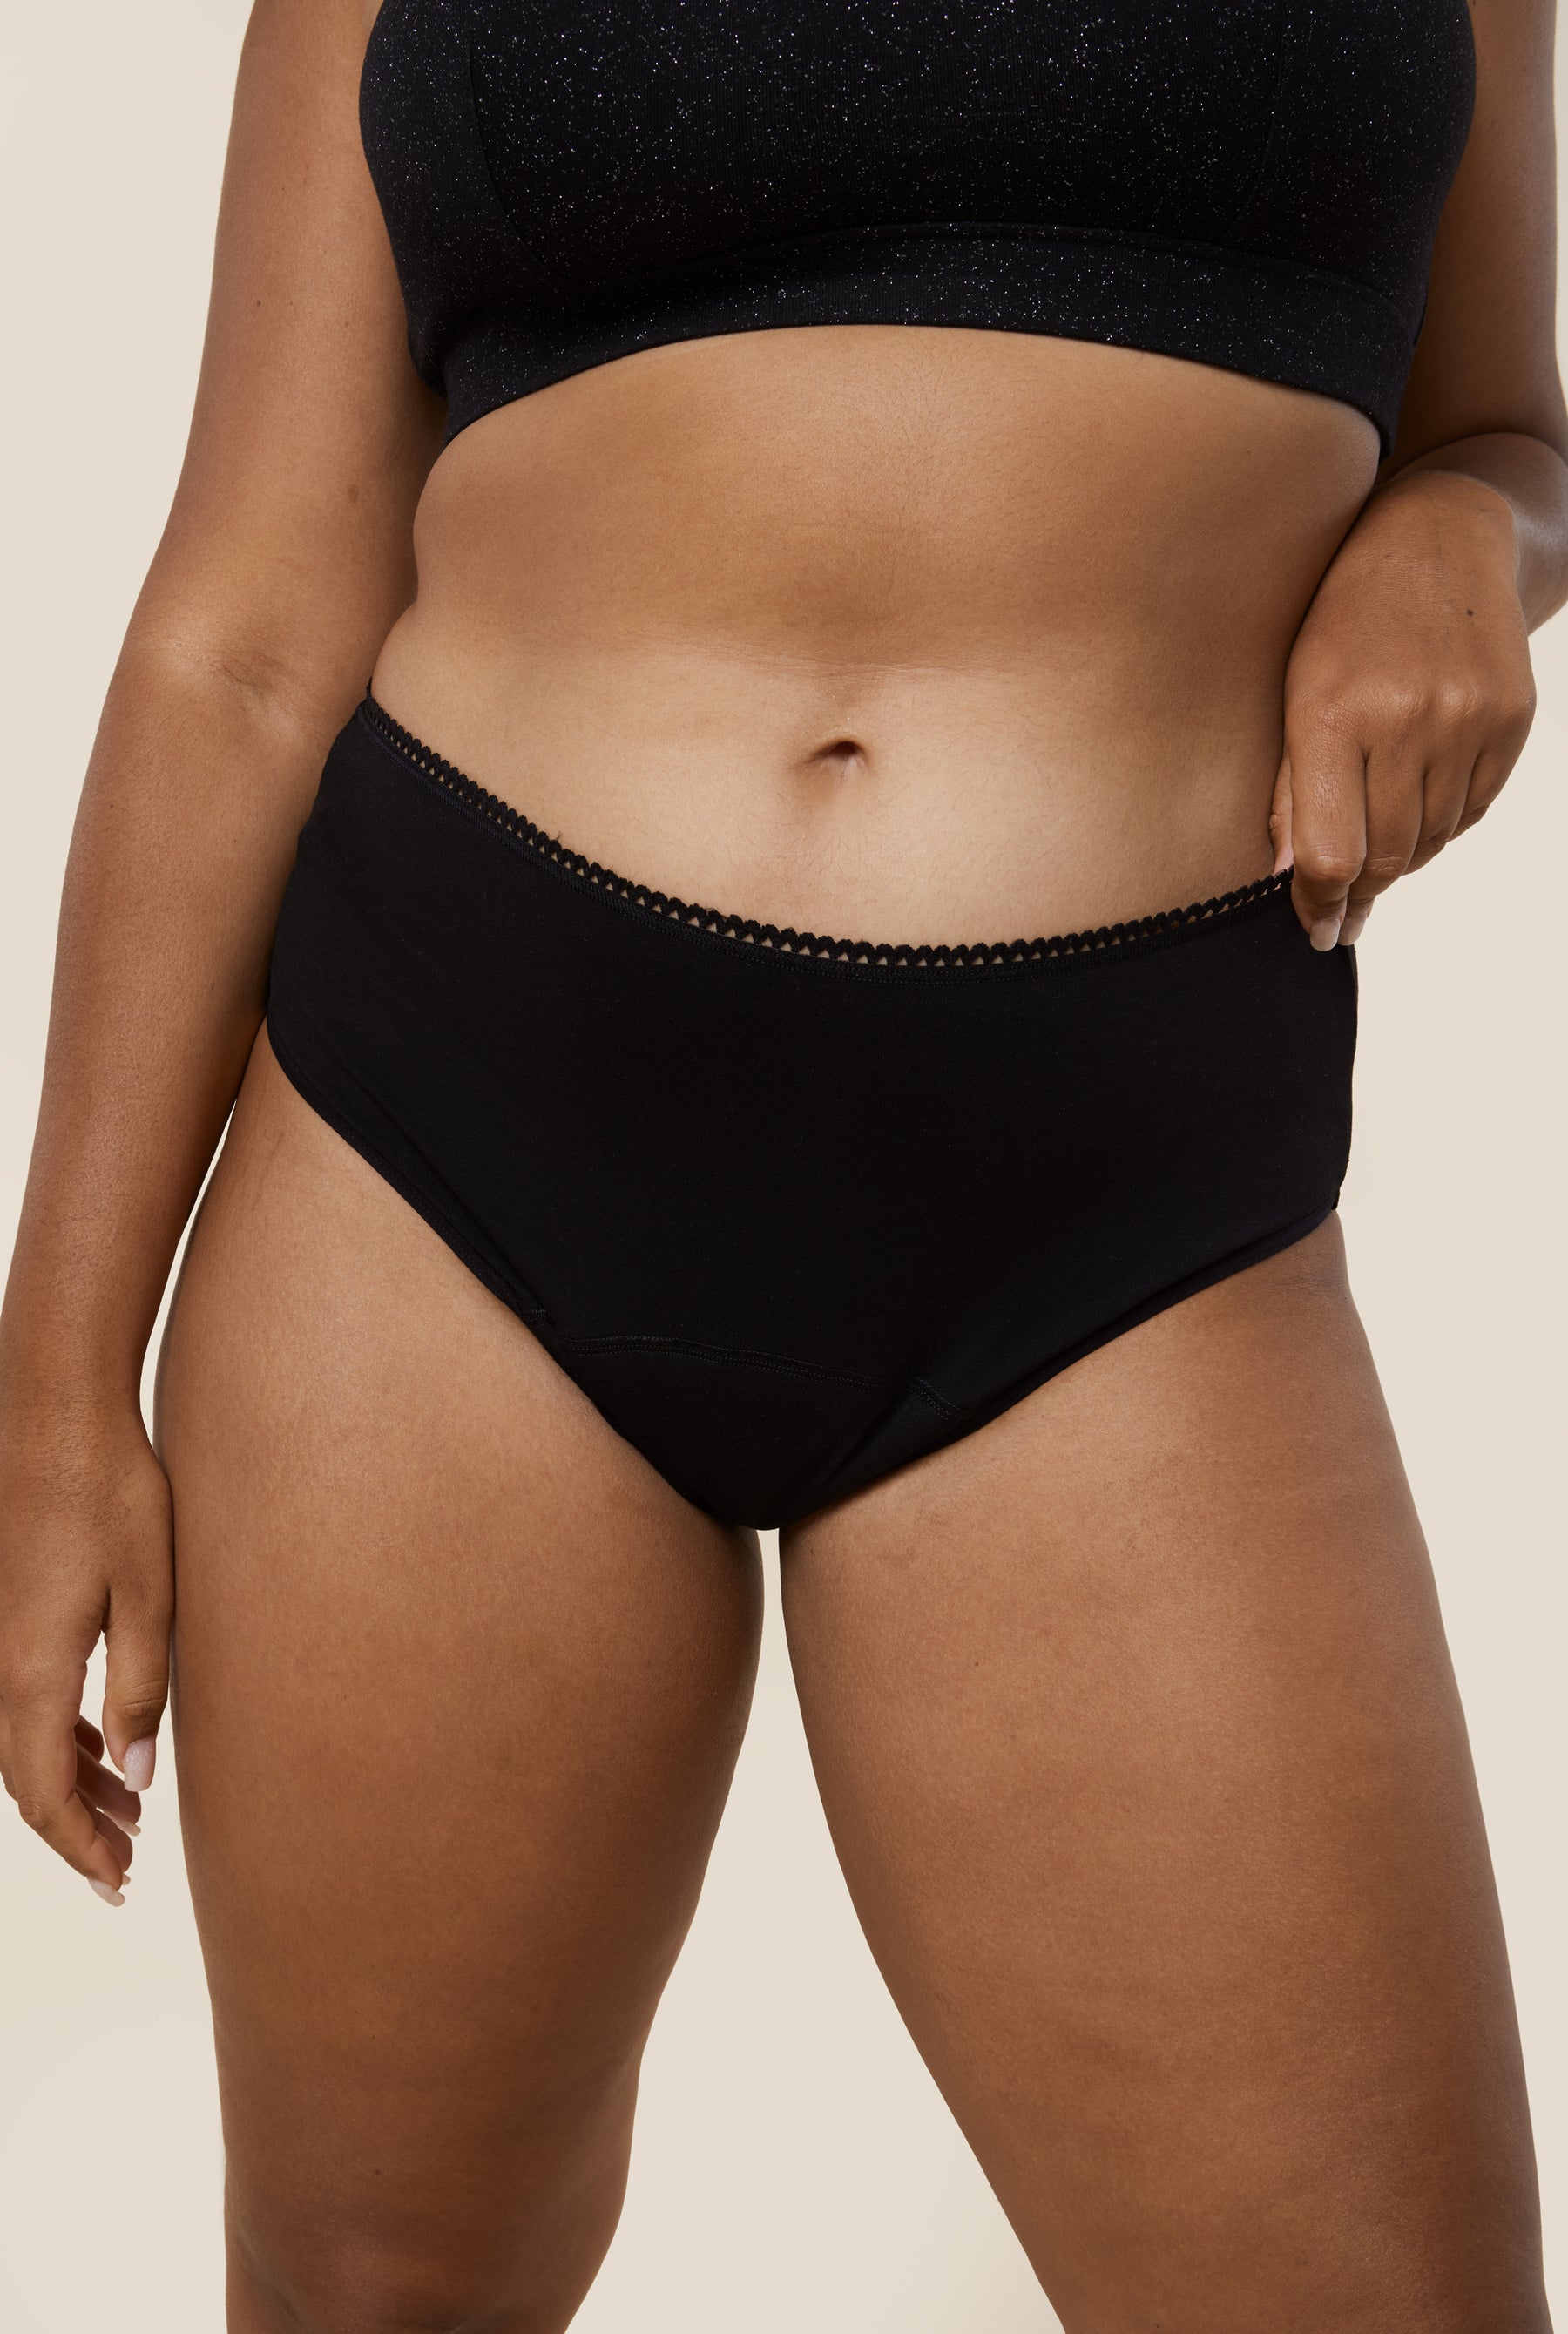 Weekiss Brazilian culotte menstruelle, culotte de regle flux abondant, culotte  menstruelle taille haute, coton